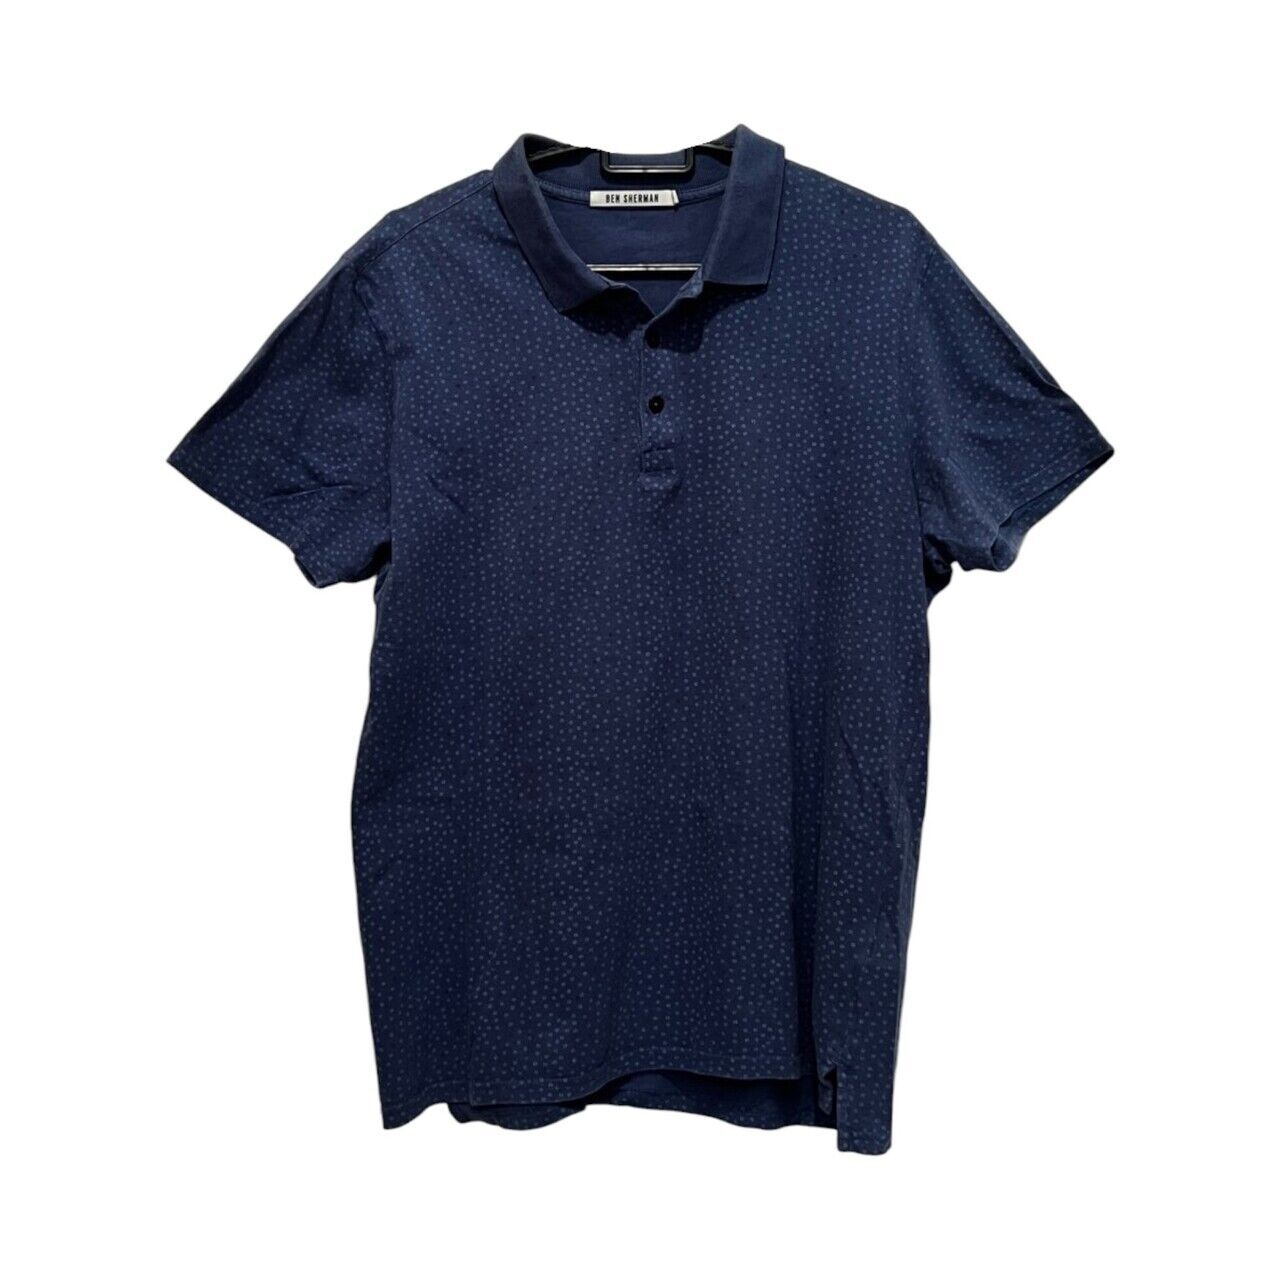 Ben Sherman Washed Blue Dotted Polo T-Shirt